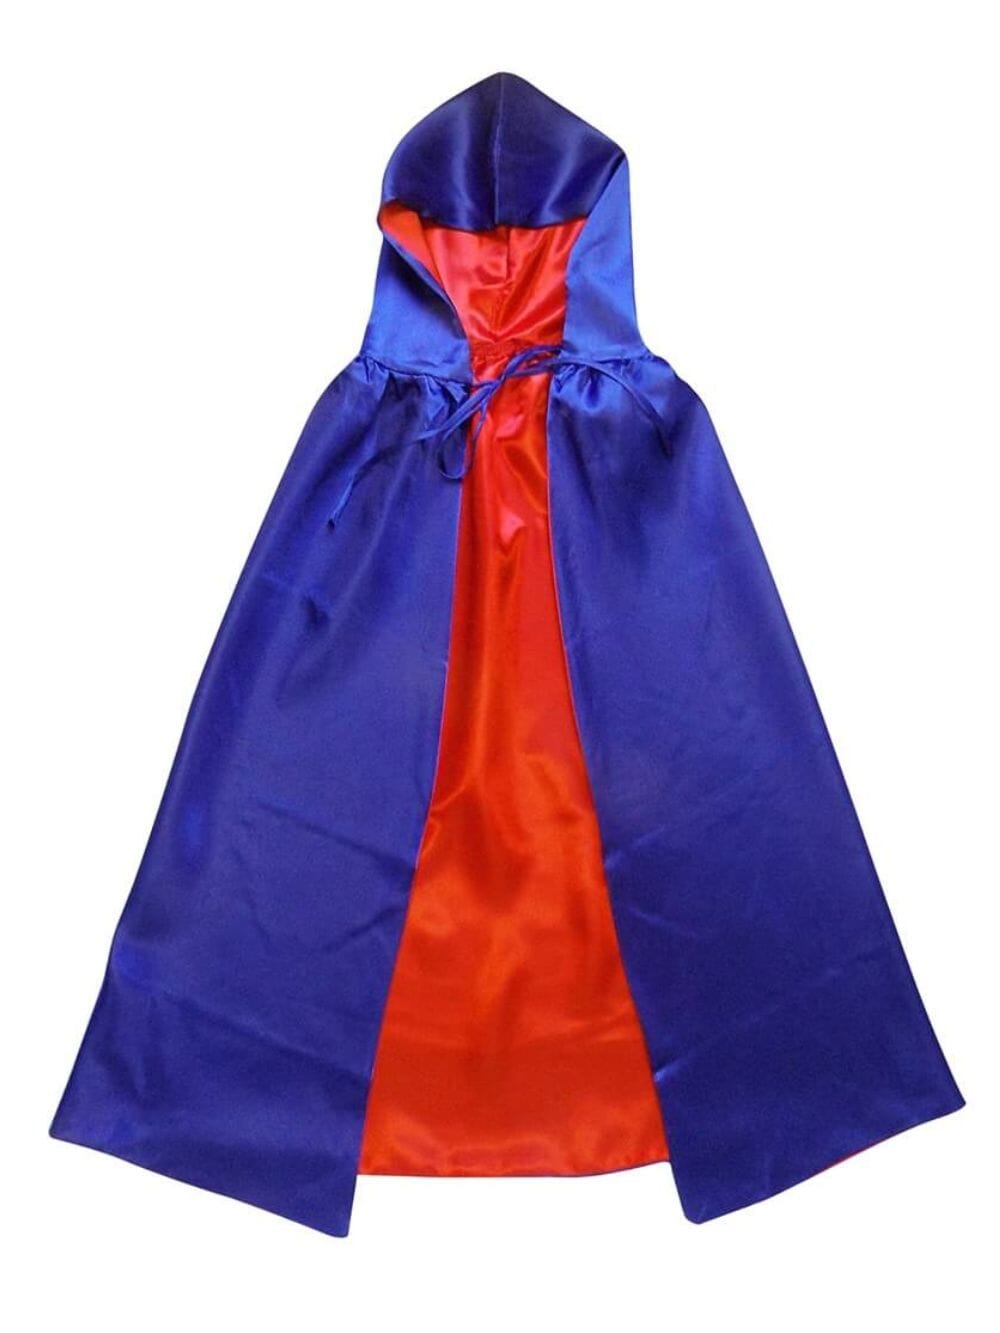 Royal Blue & Red Hooded Cape, Superhero or Princess Reversible Hooded Cloak - Sydney So Sweet